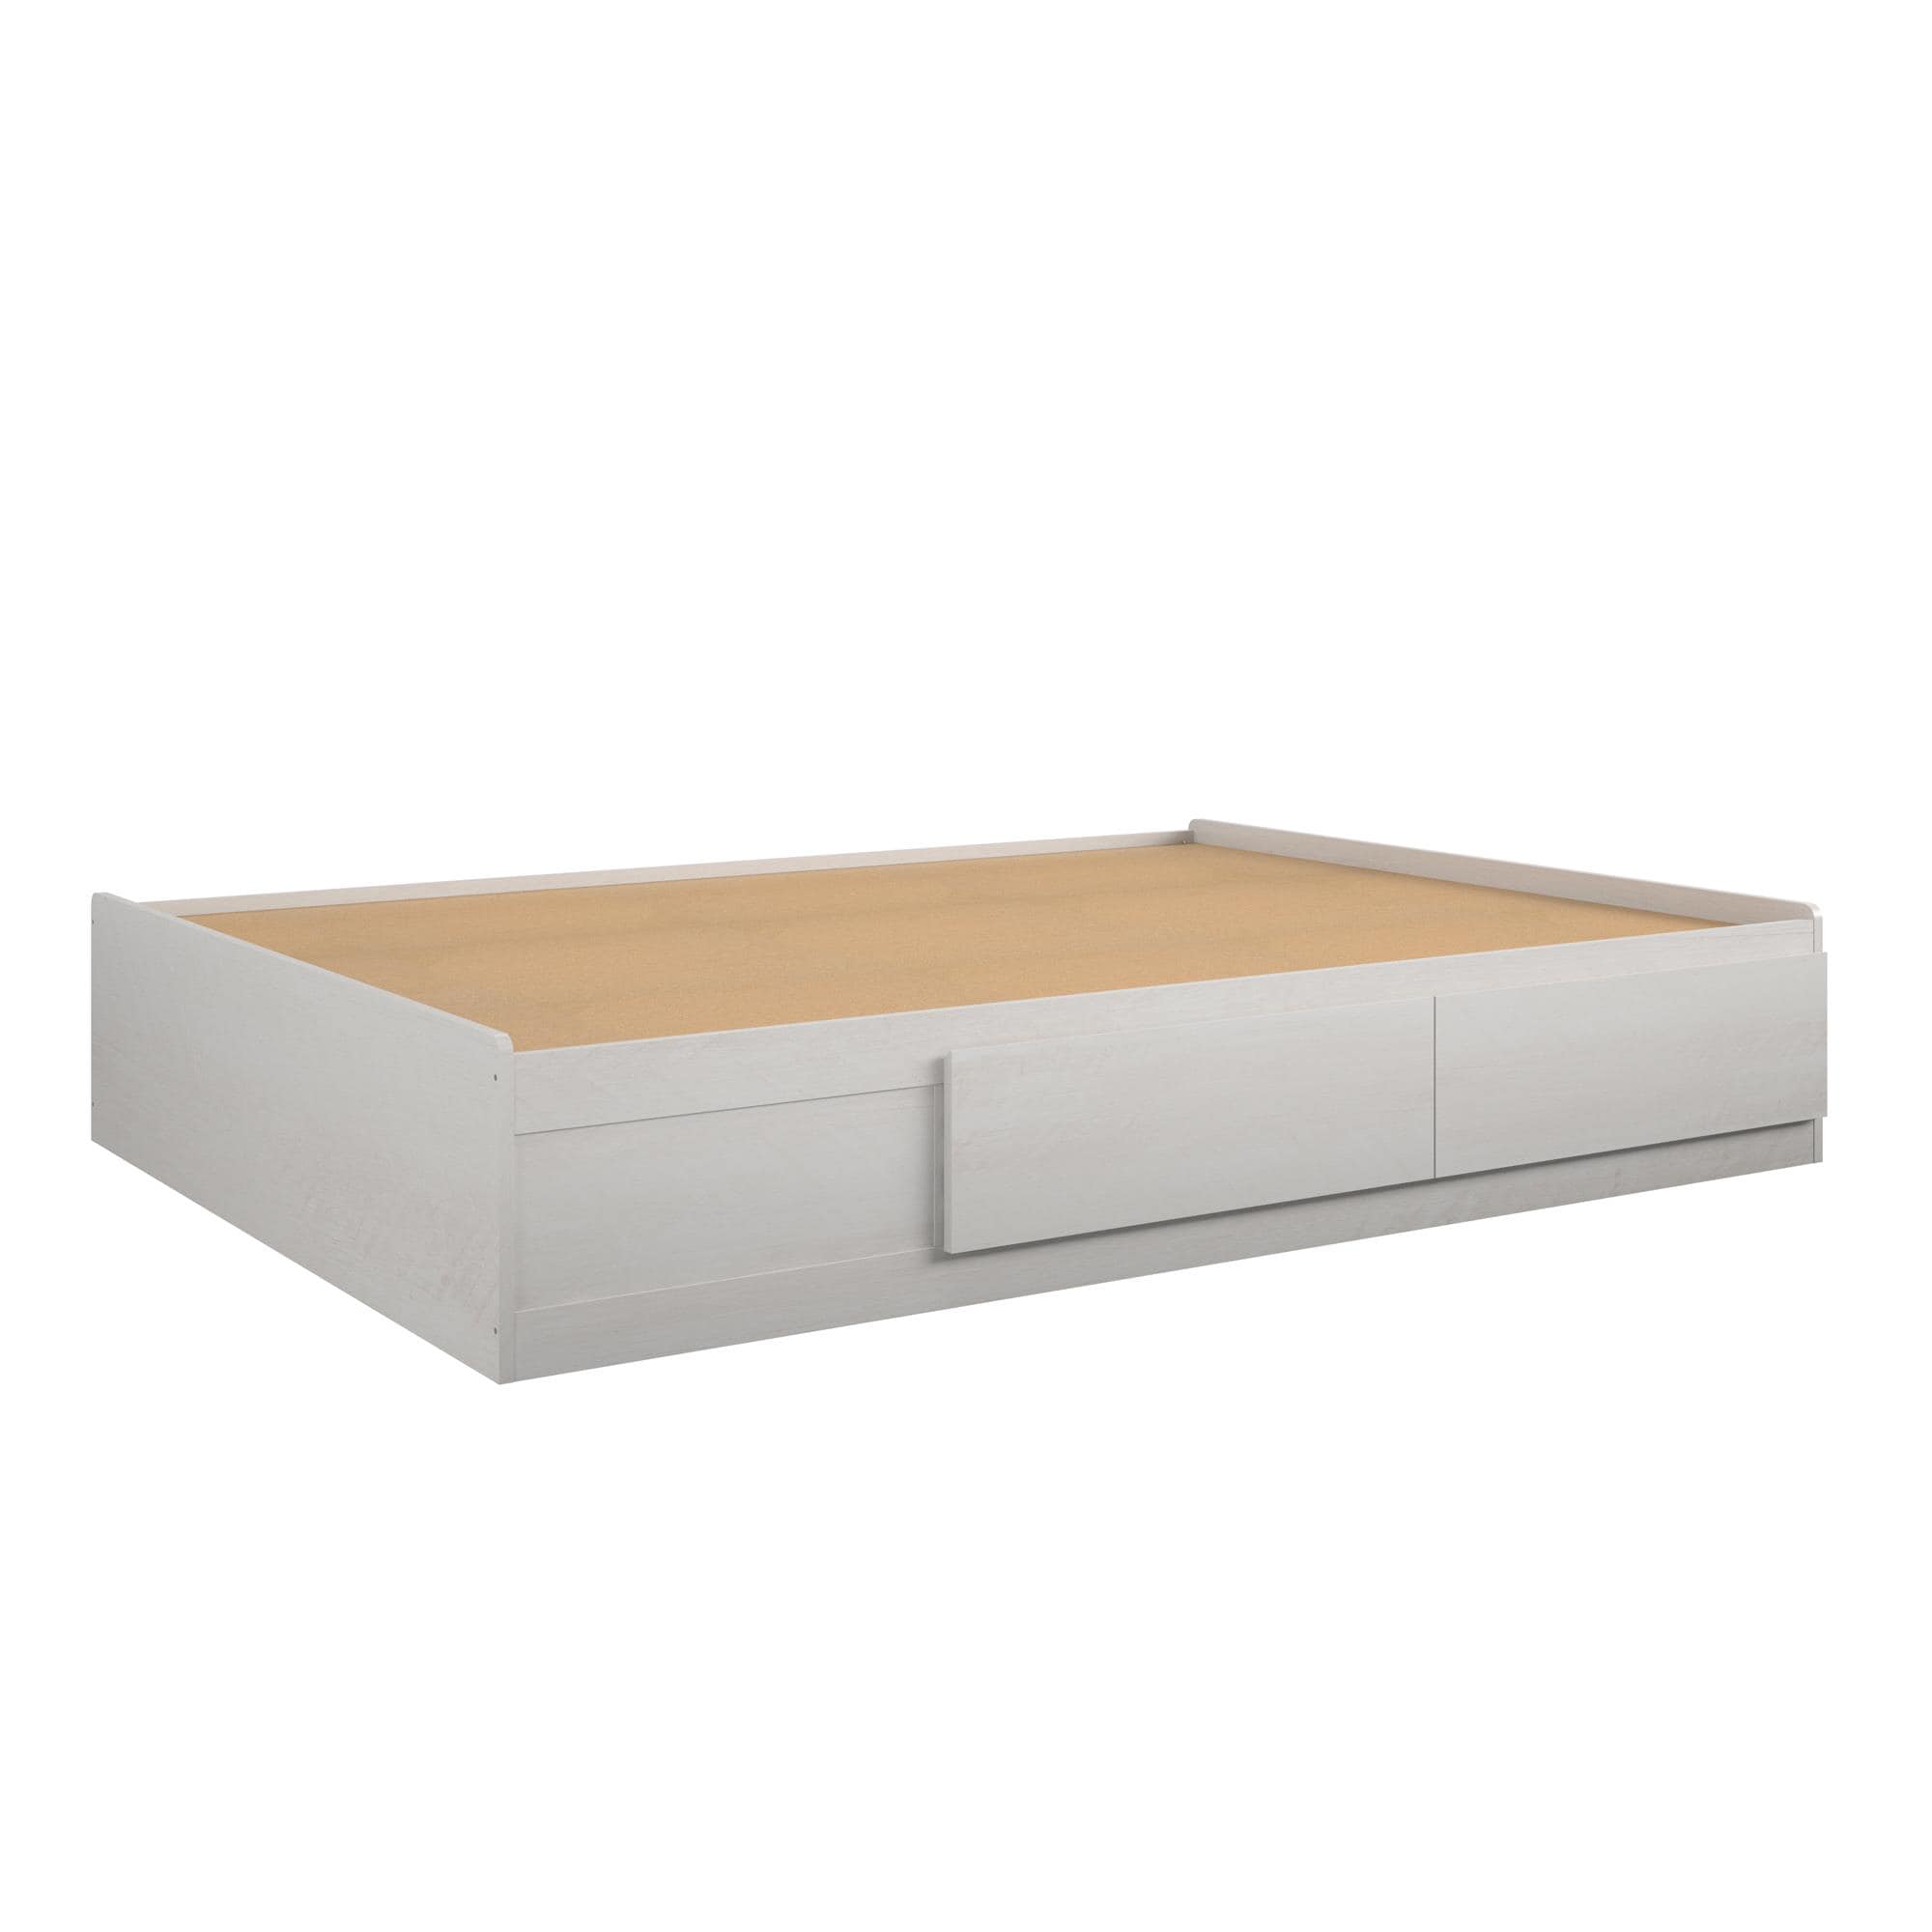 Ameriwood Home Platform Bed Ivory Oak, Ameriwood Twin Mates Bed Assembly Instructions